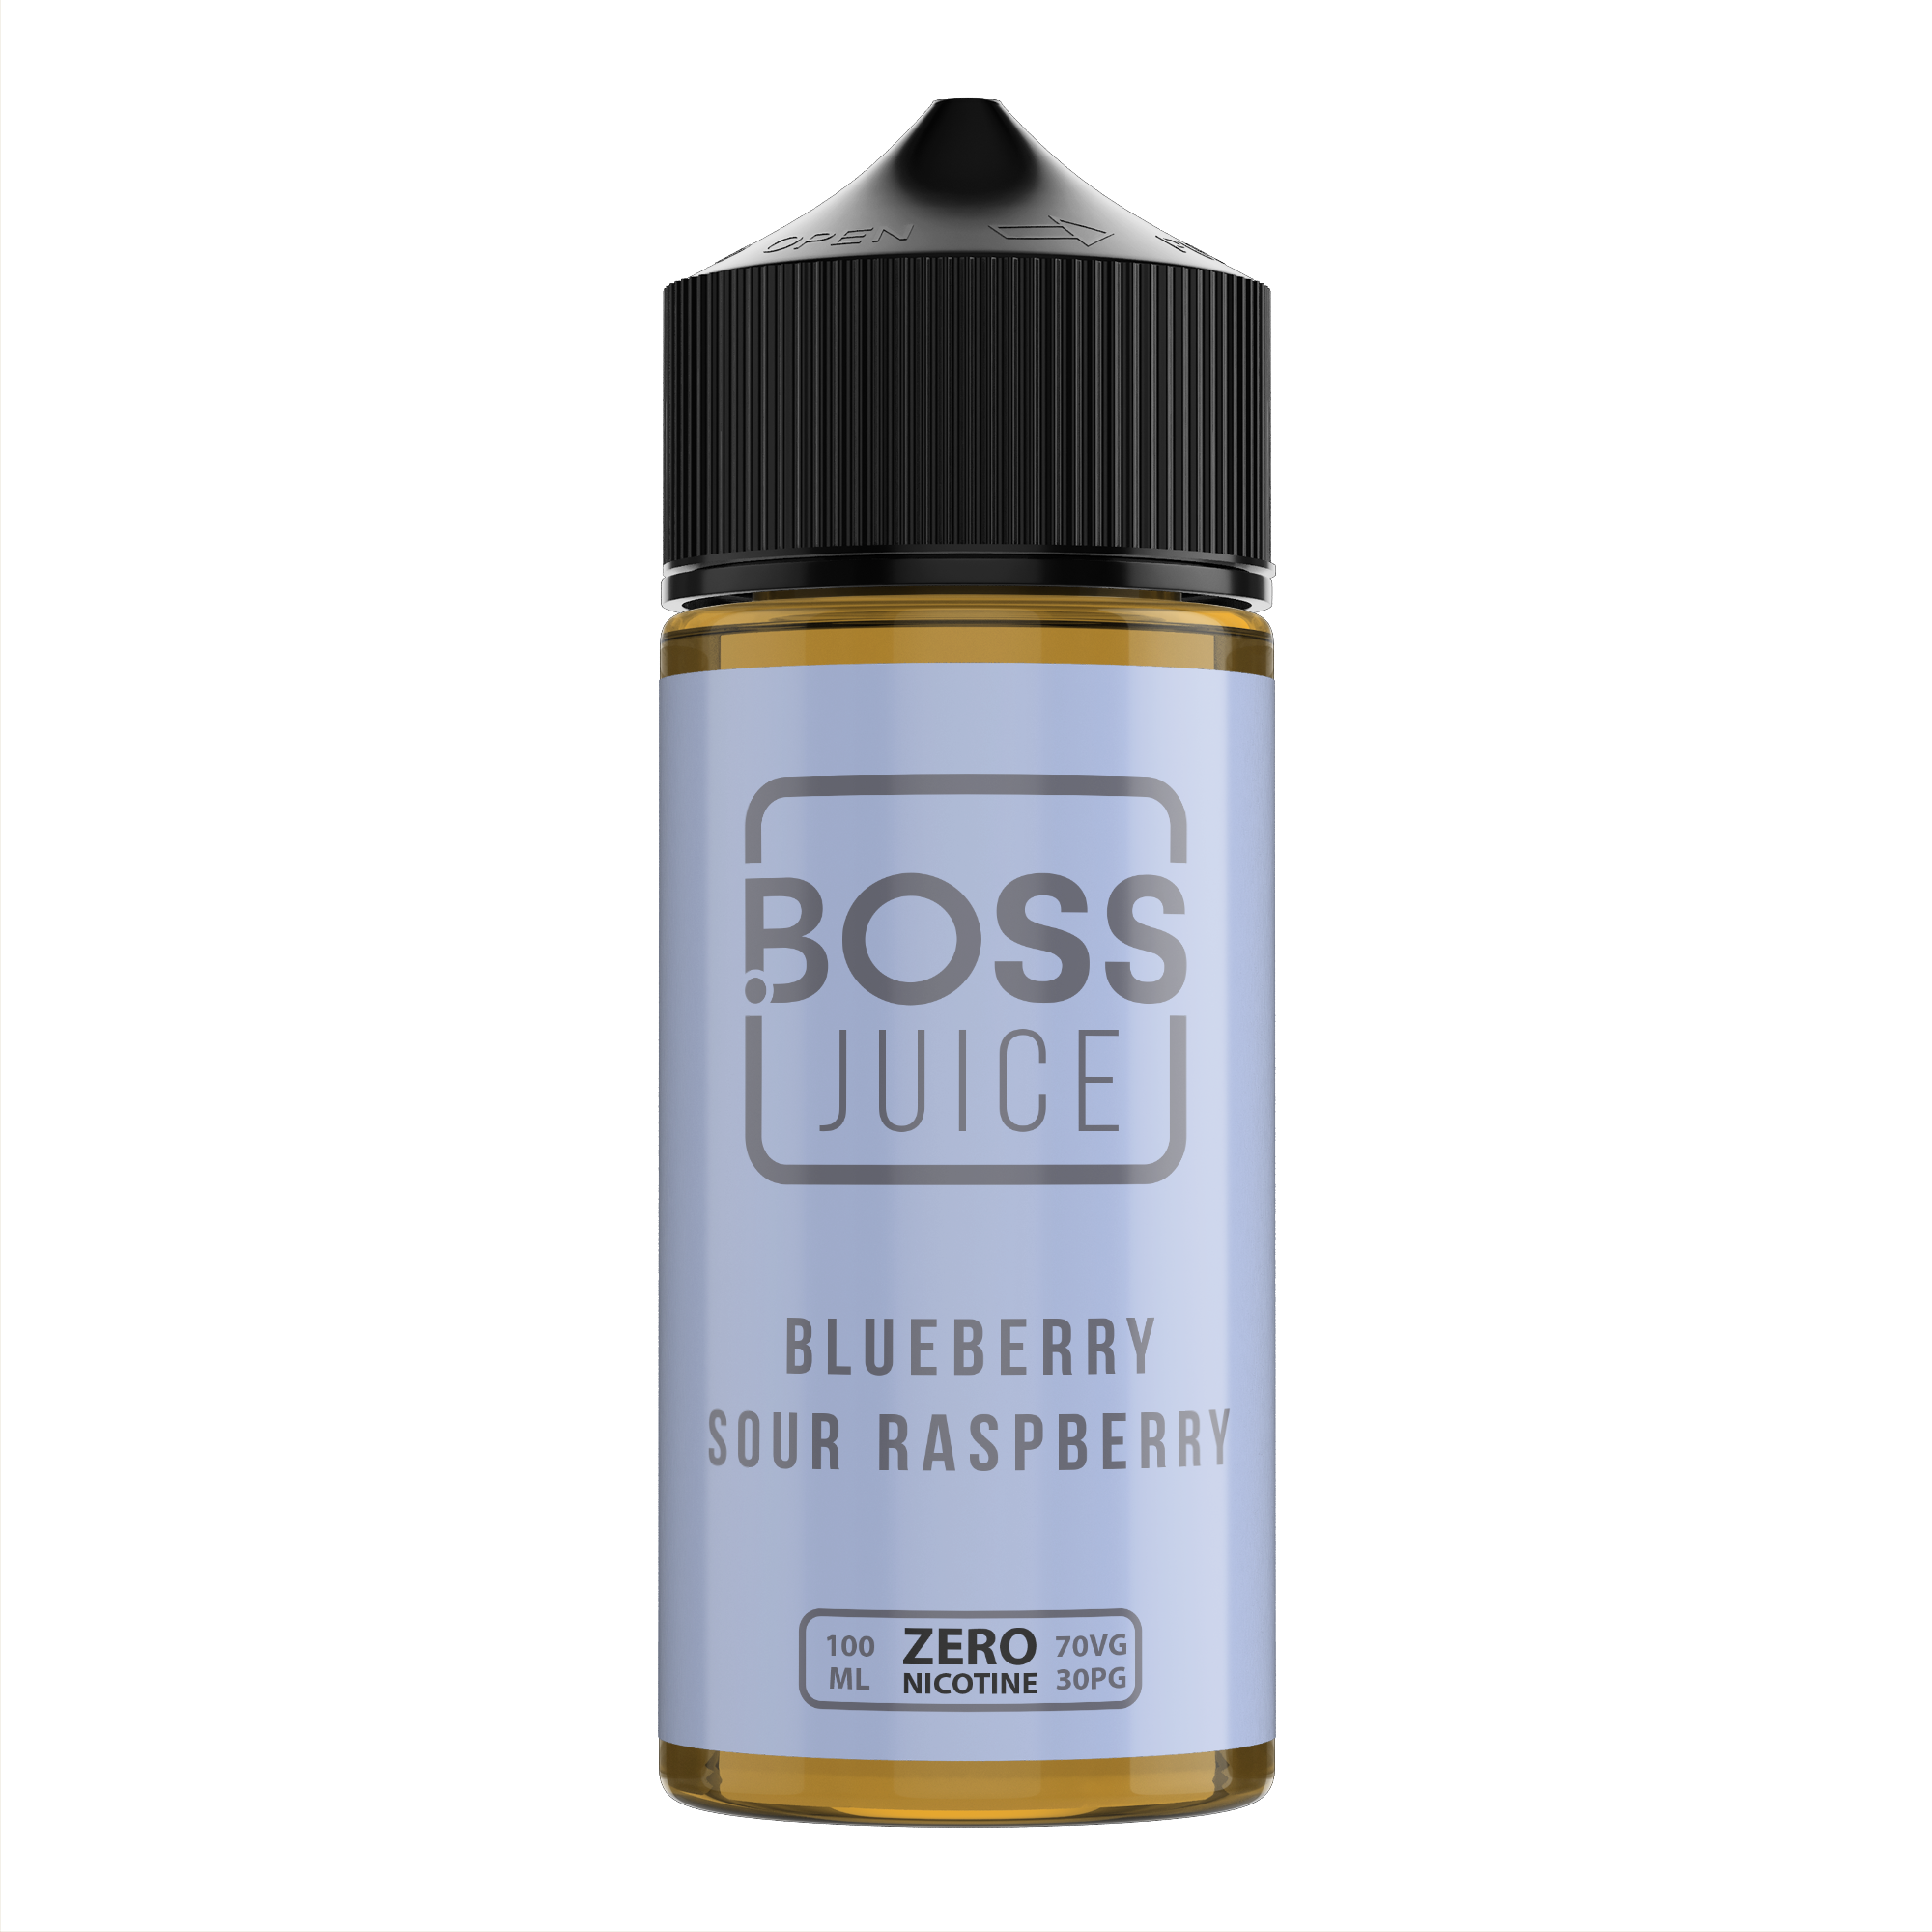 Blueberry Sour Raspberry 100ml by Boss Juice